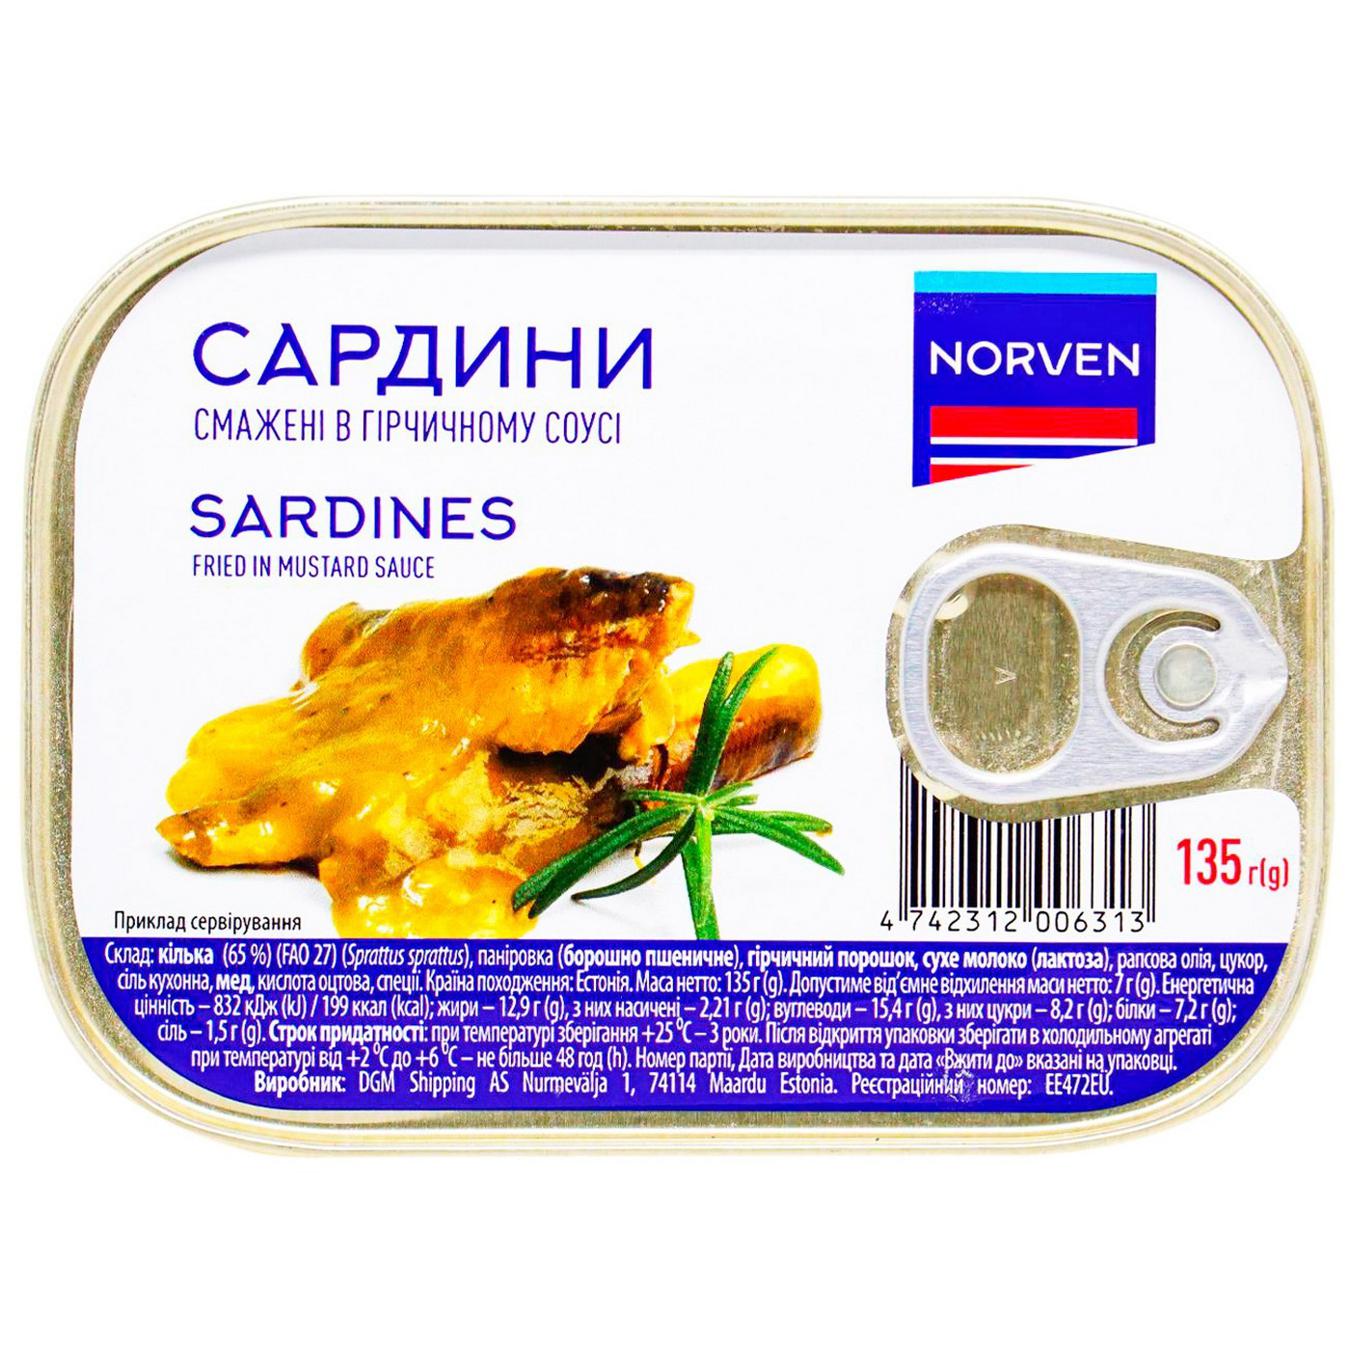 Norven sardines in mustard sauce 135g